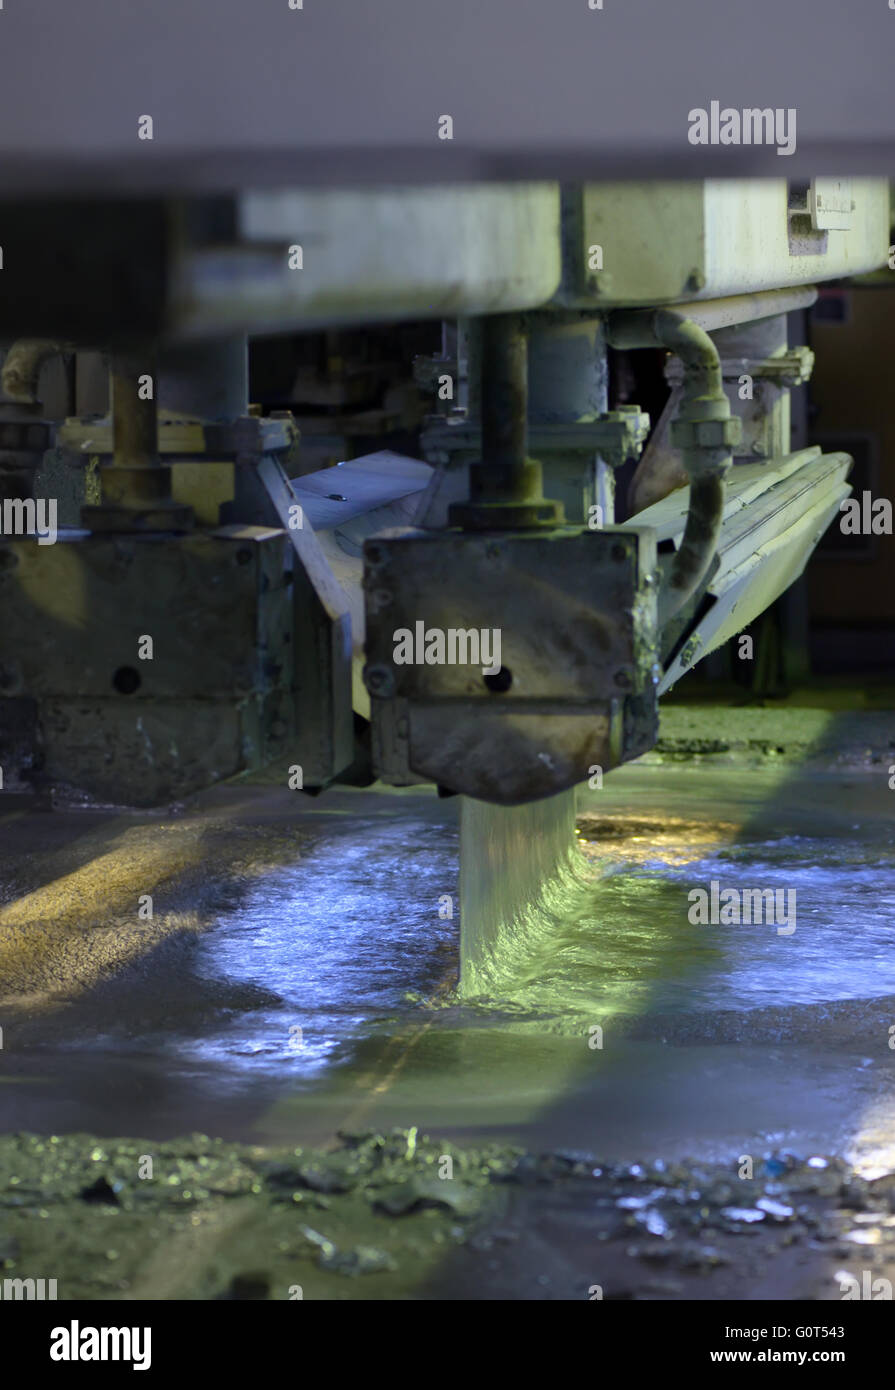 Galvanizing steel processing.Production of zinc-coated steel Stock Photo